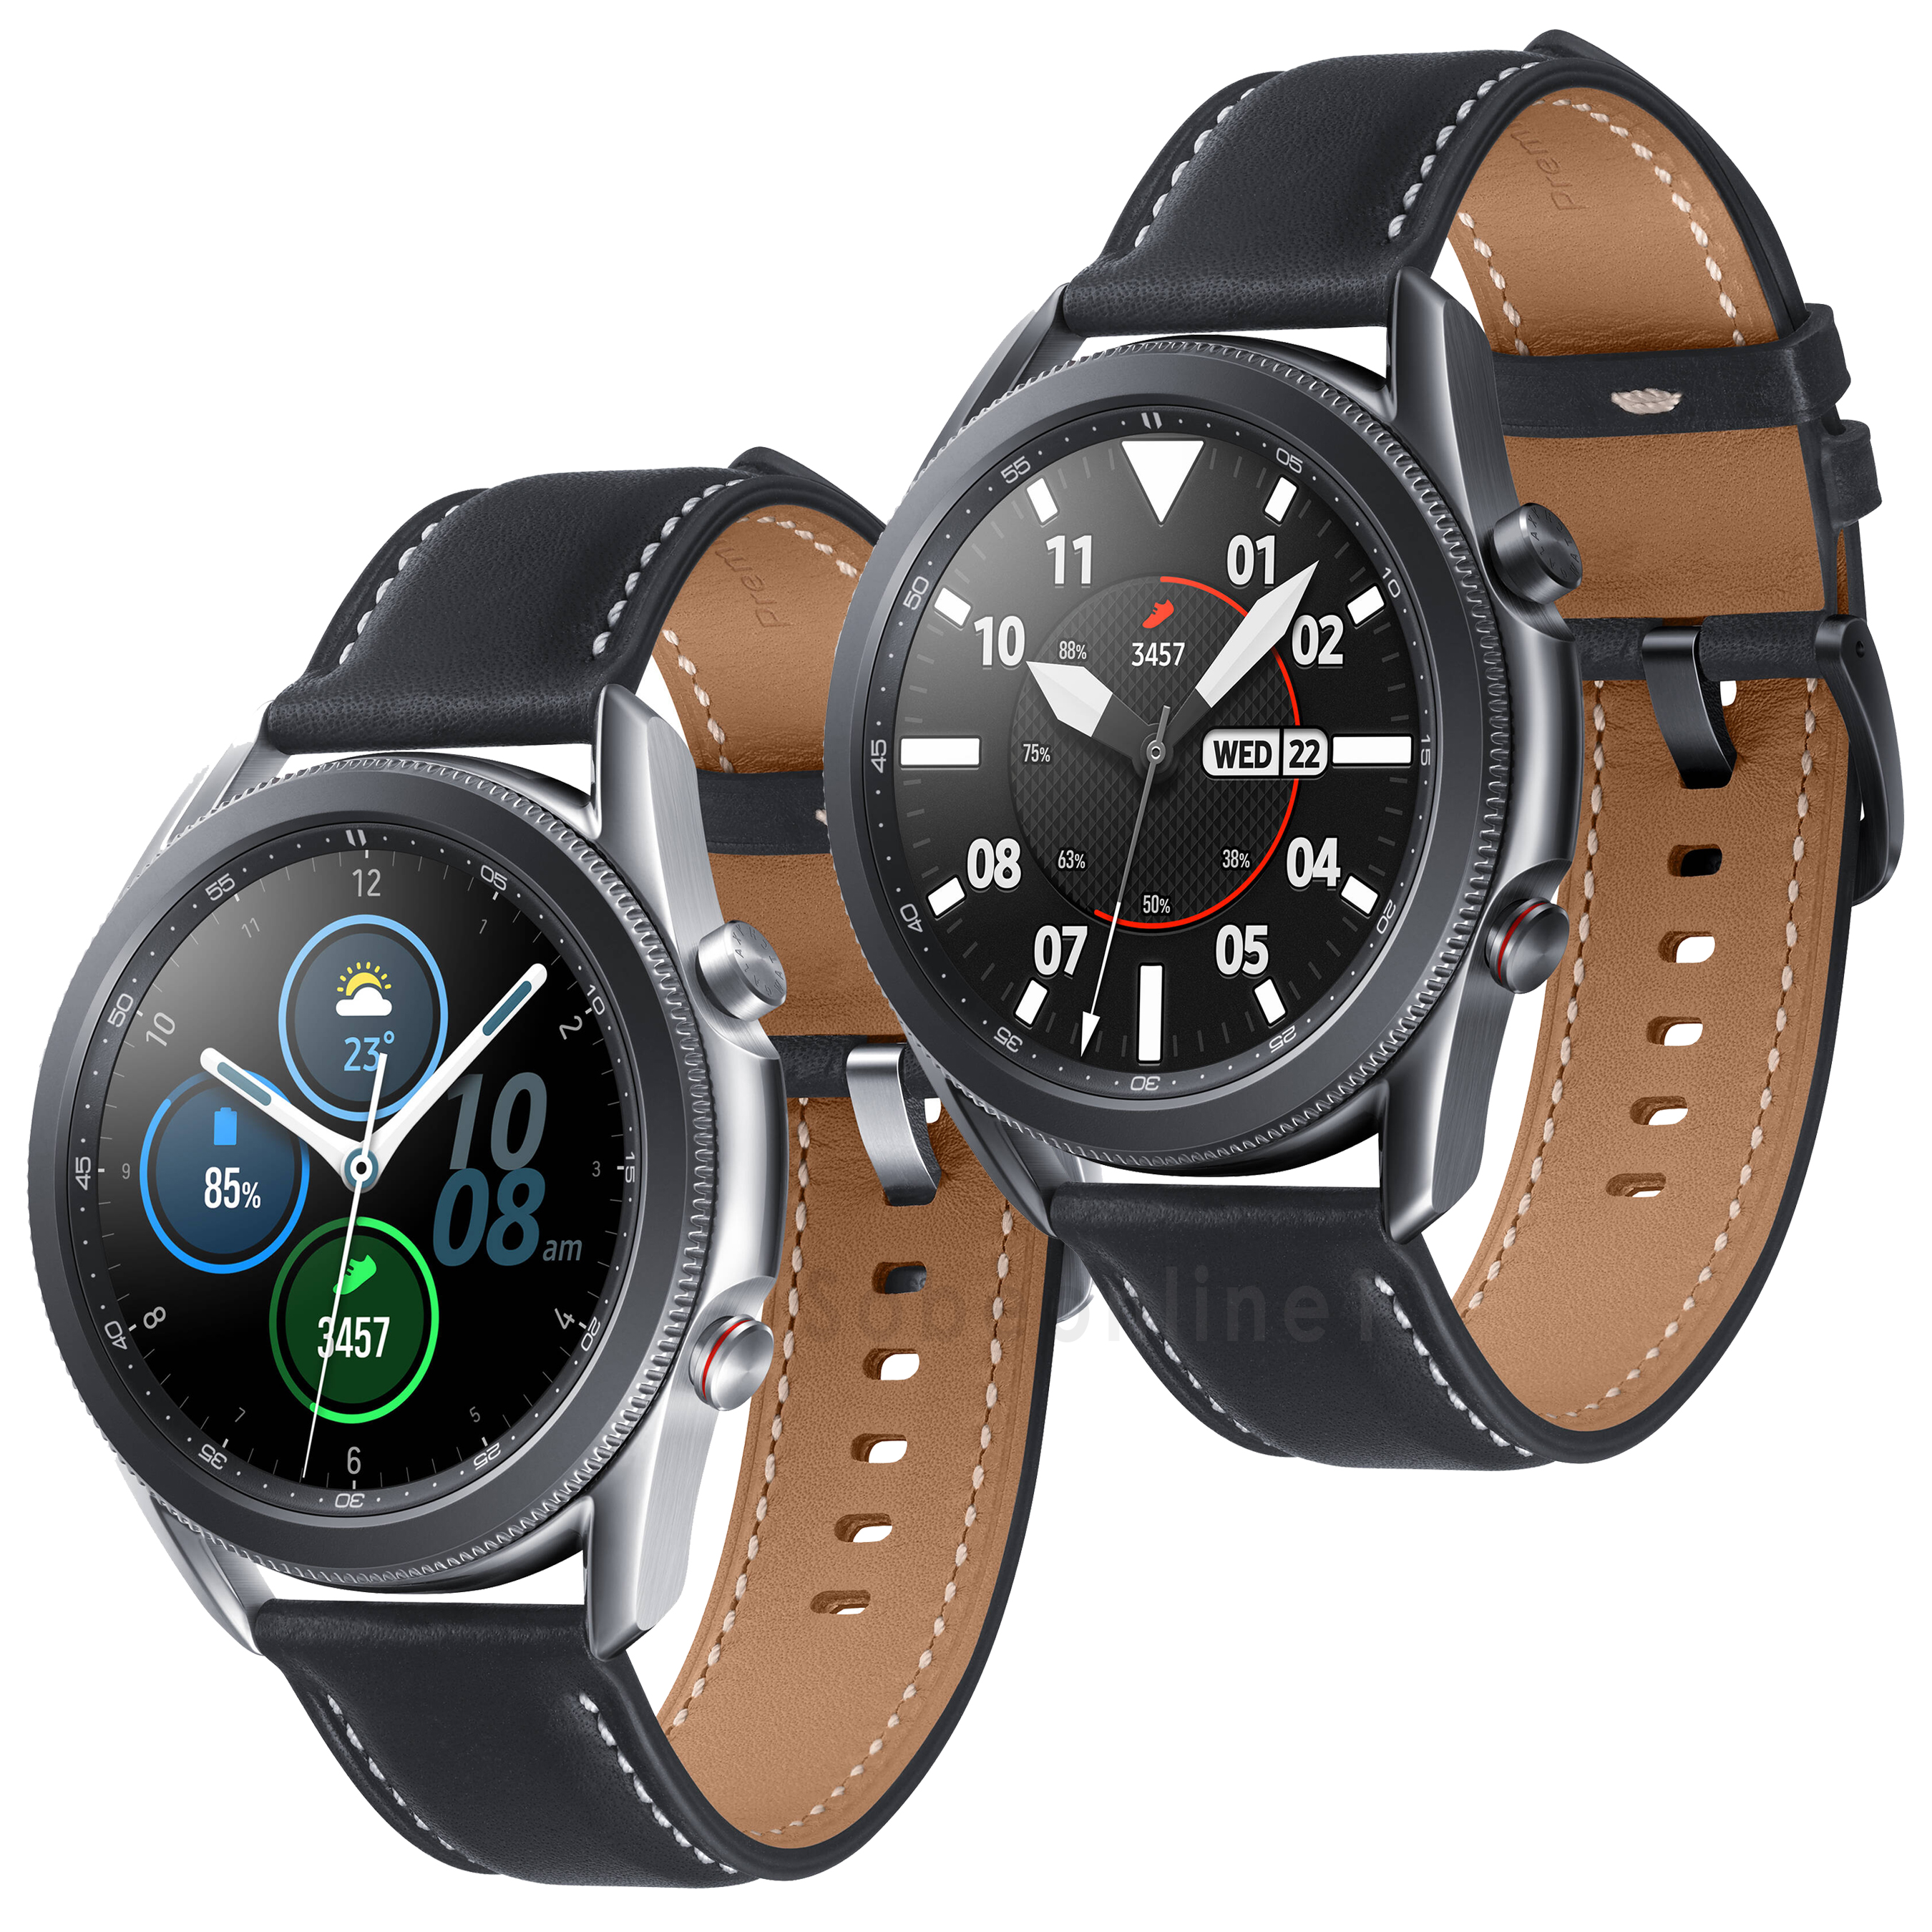 Samsung Galaxy Watch 3 SM-R840 (45mm) Wi-Fi Smartwatch